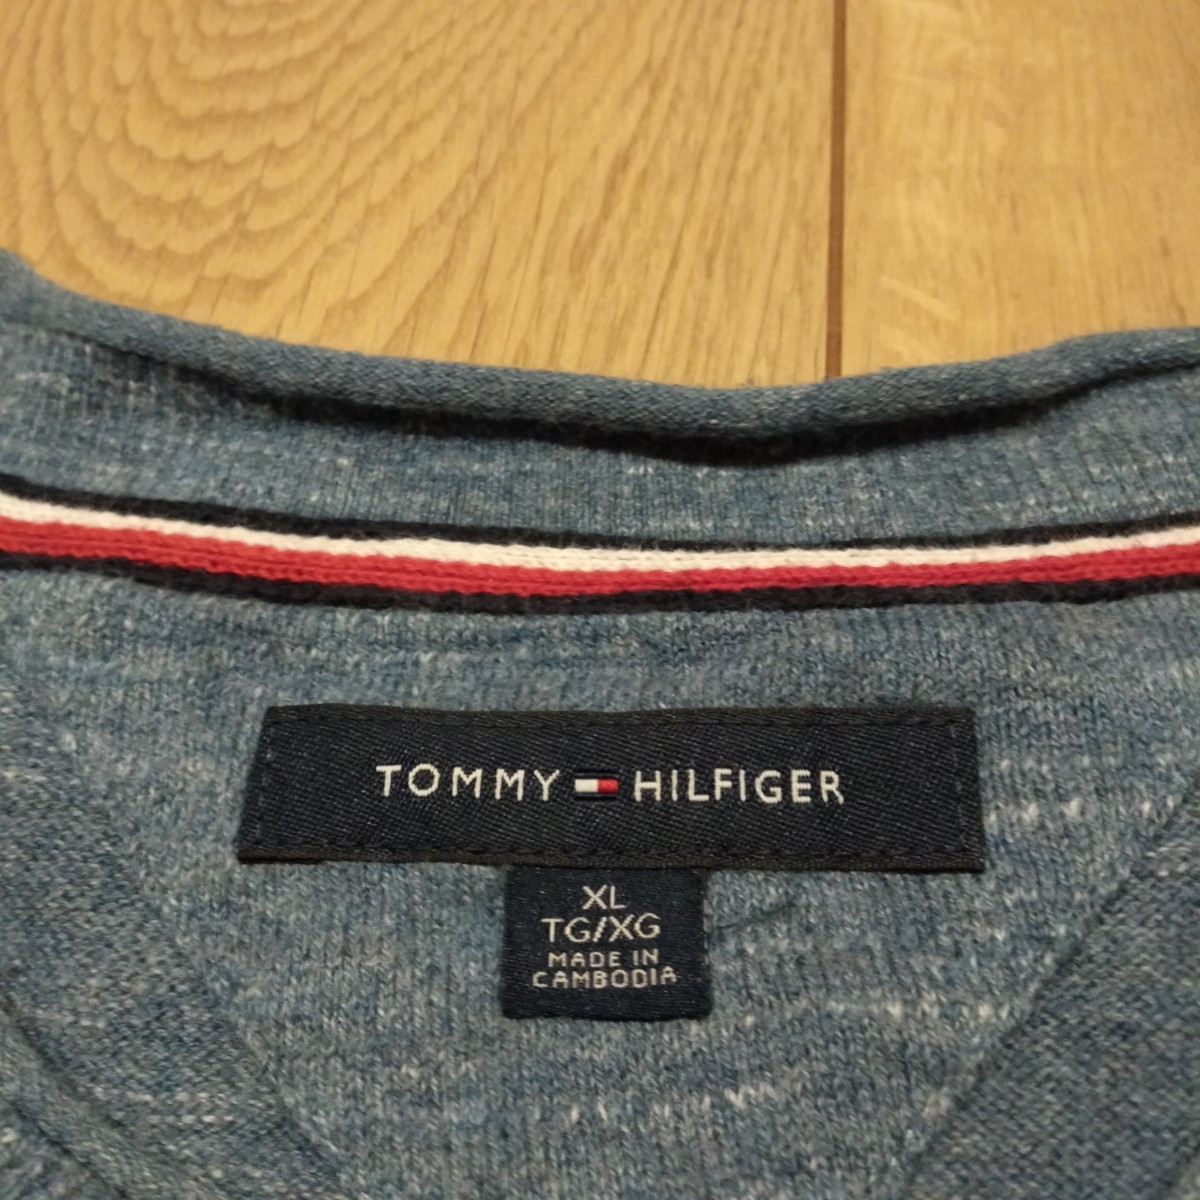 USA б/у одежда .XL размер TOMMY HILFIGER Tommy Hilfiger Logo вышивка вязаный 